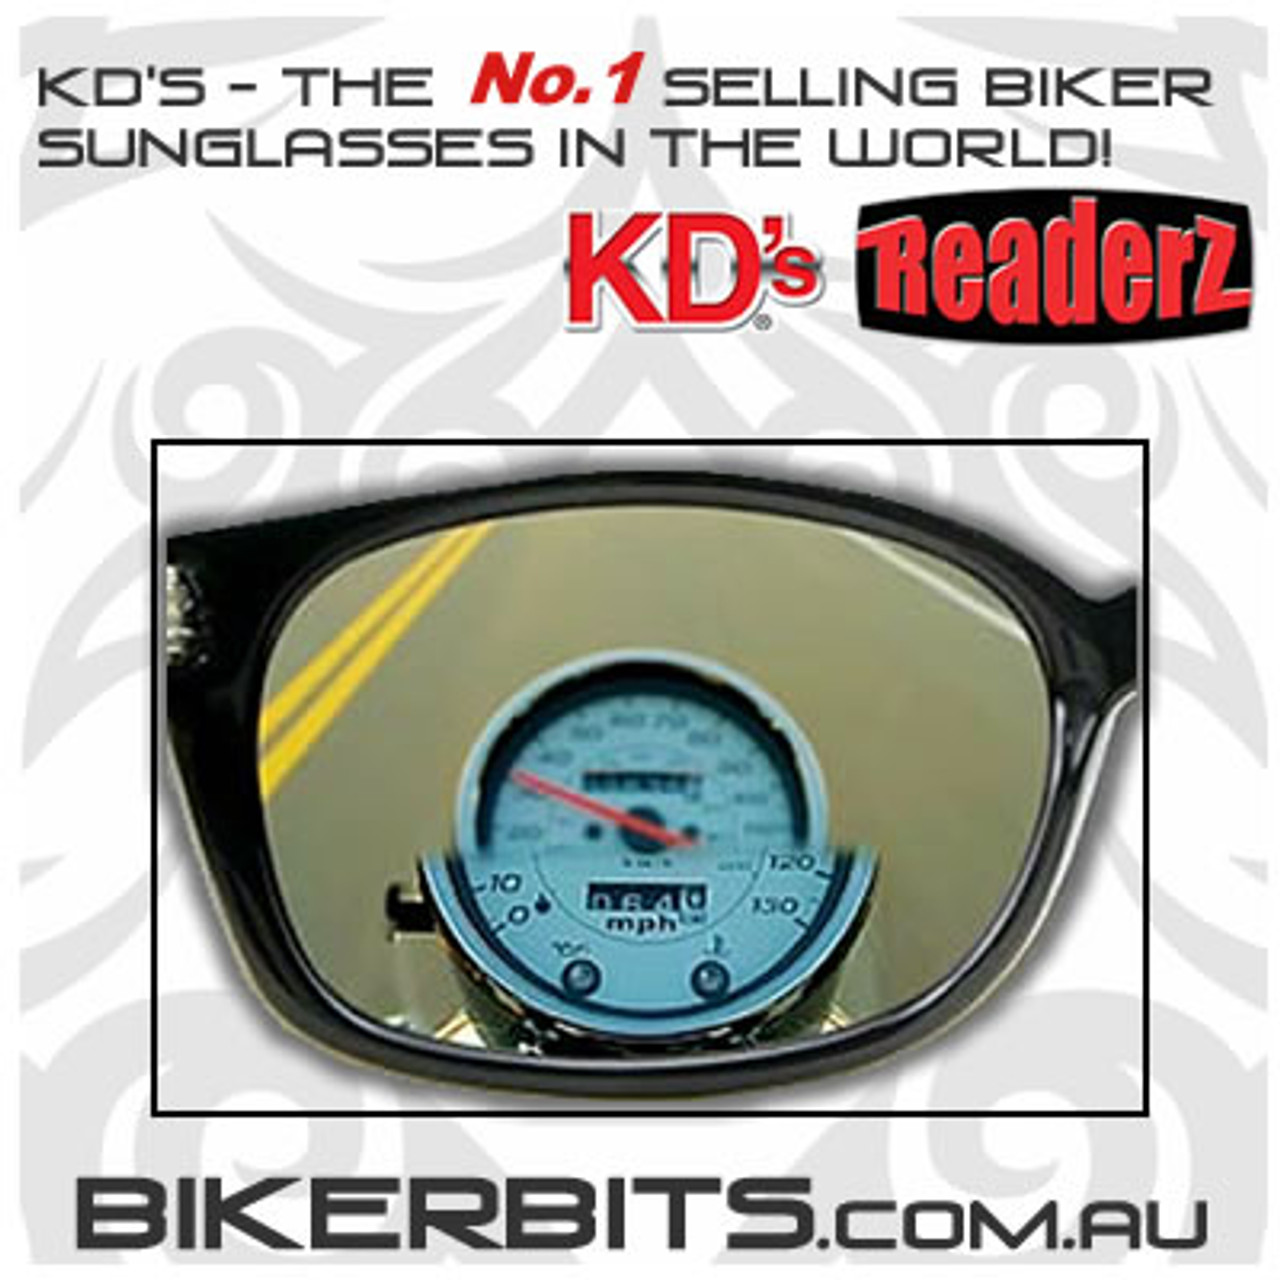 Motorcycle Sunglasses - X KD's Bi-Focal Readerz - Clear - 1.75